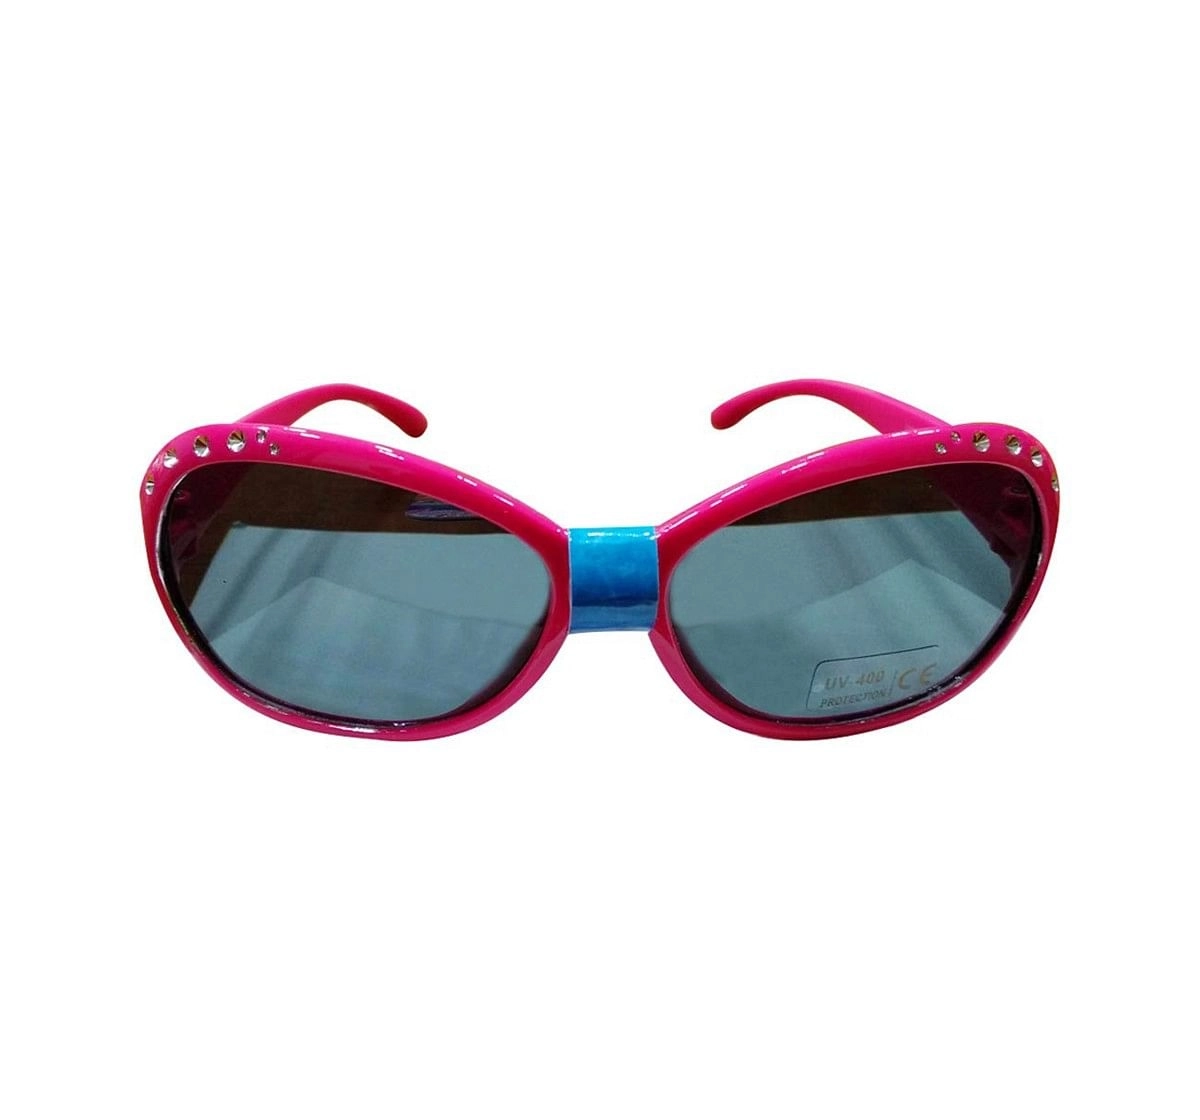 Barbie Mermaid Wrap Around Sunglasses for age 3Y+ (Pink)